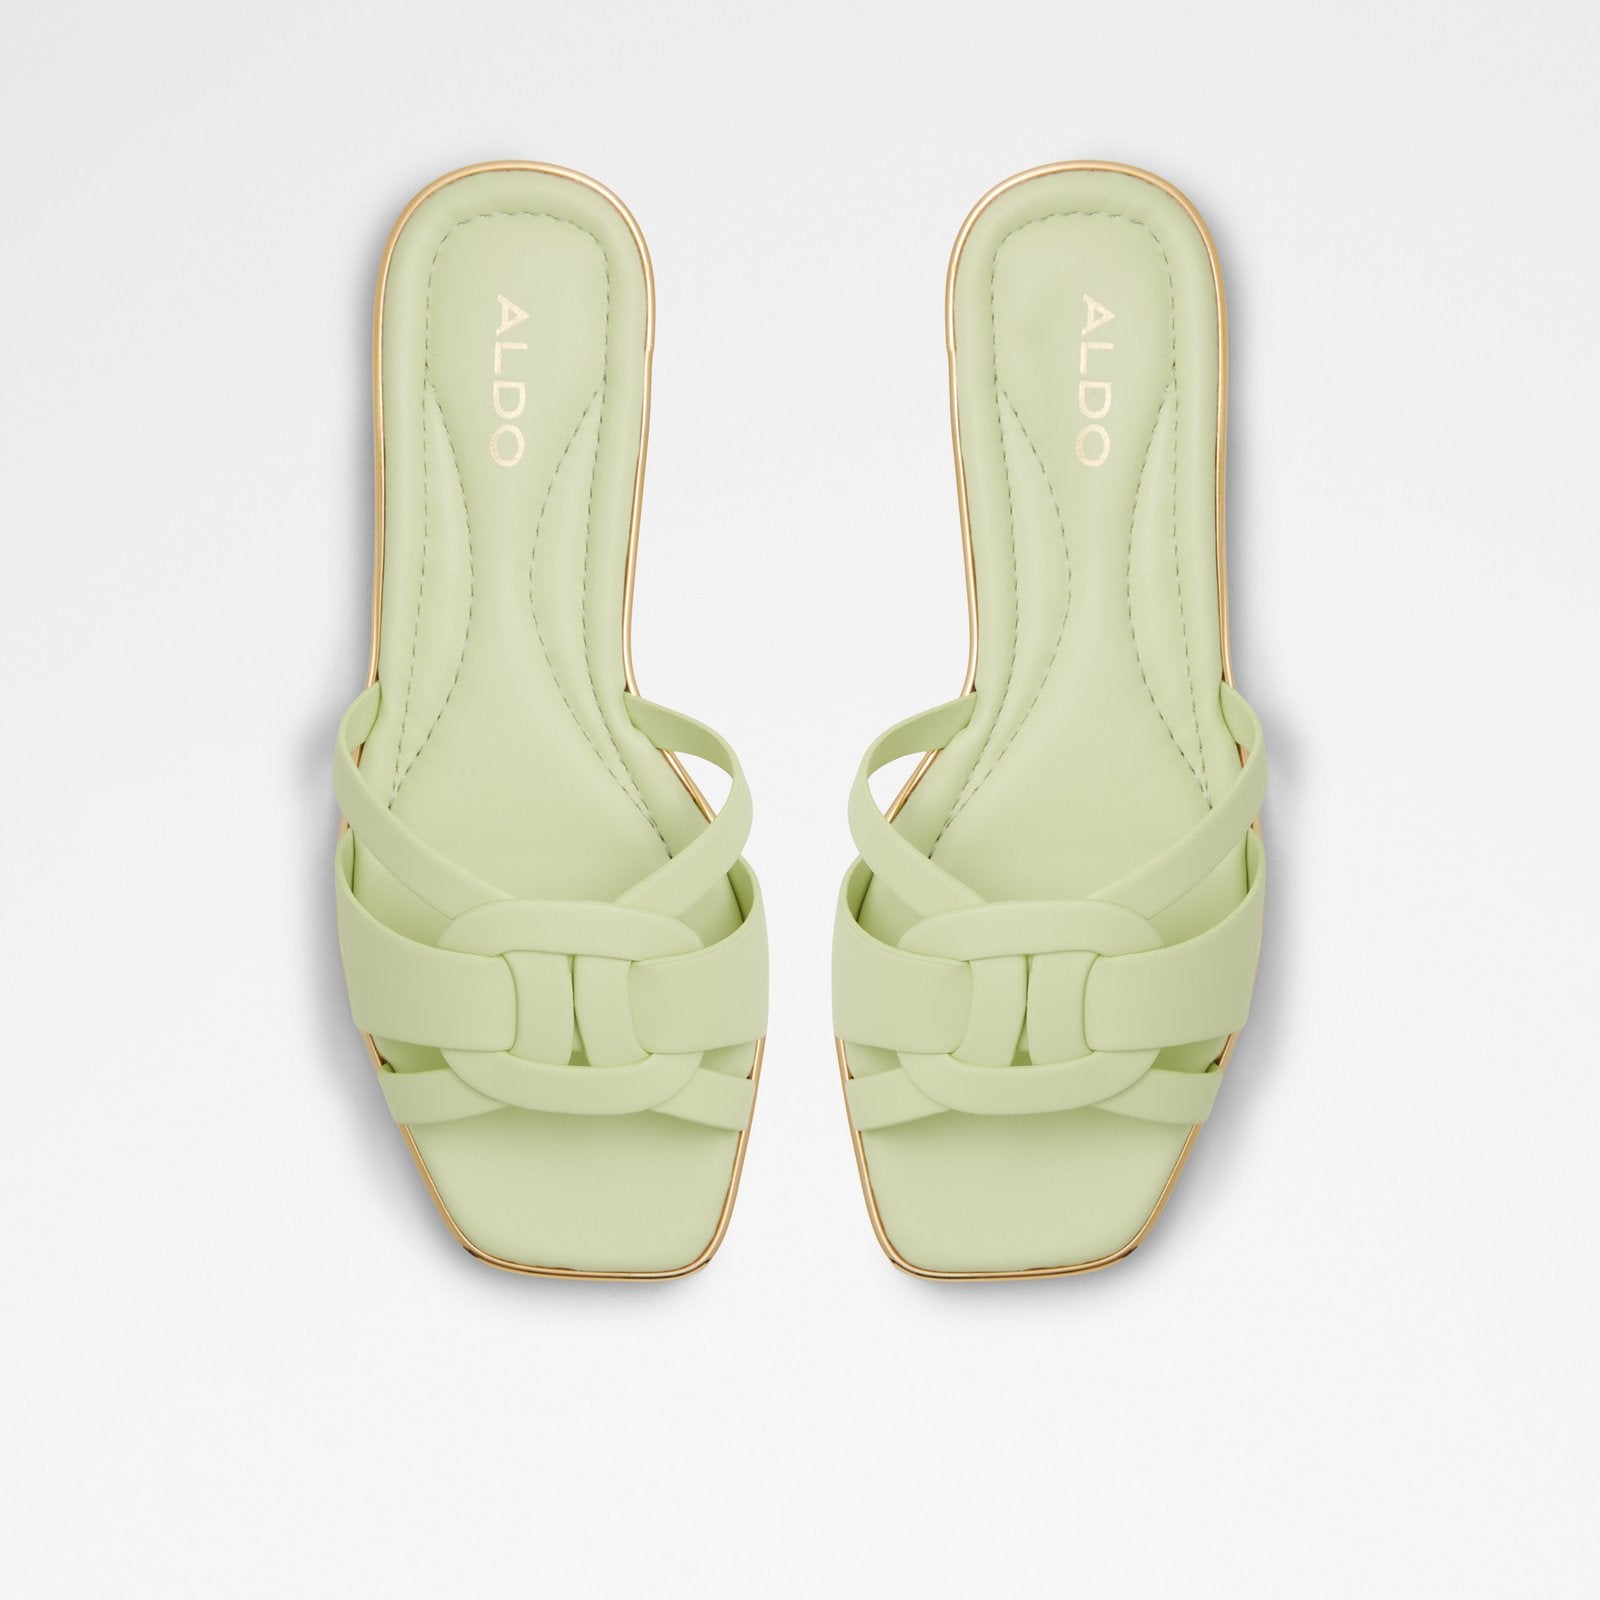 Cadialdan / Flat Sandals Women Shoes - Green - ALDO KSA